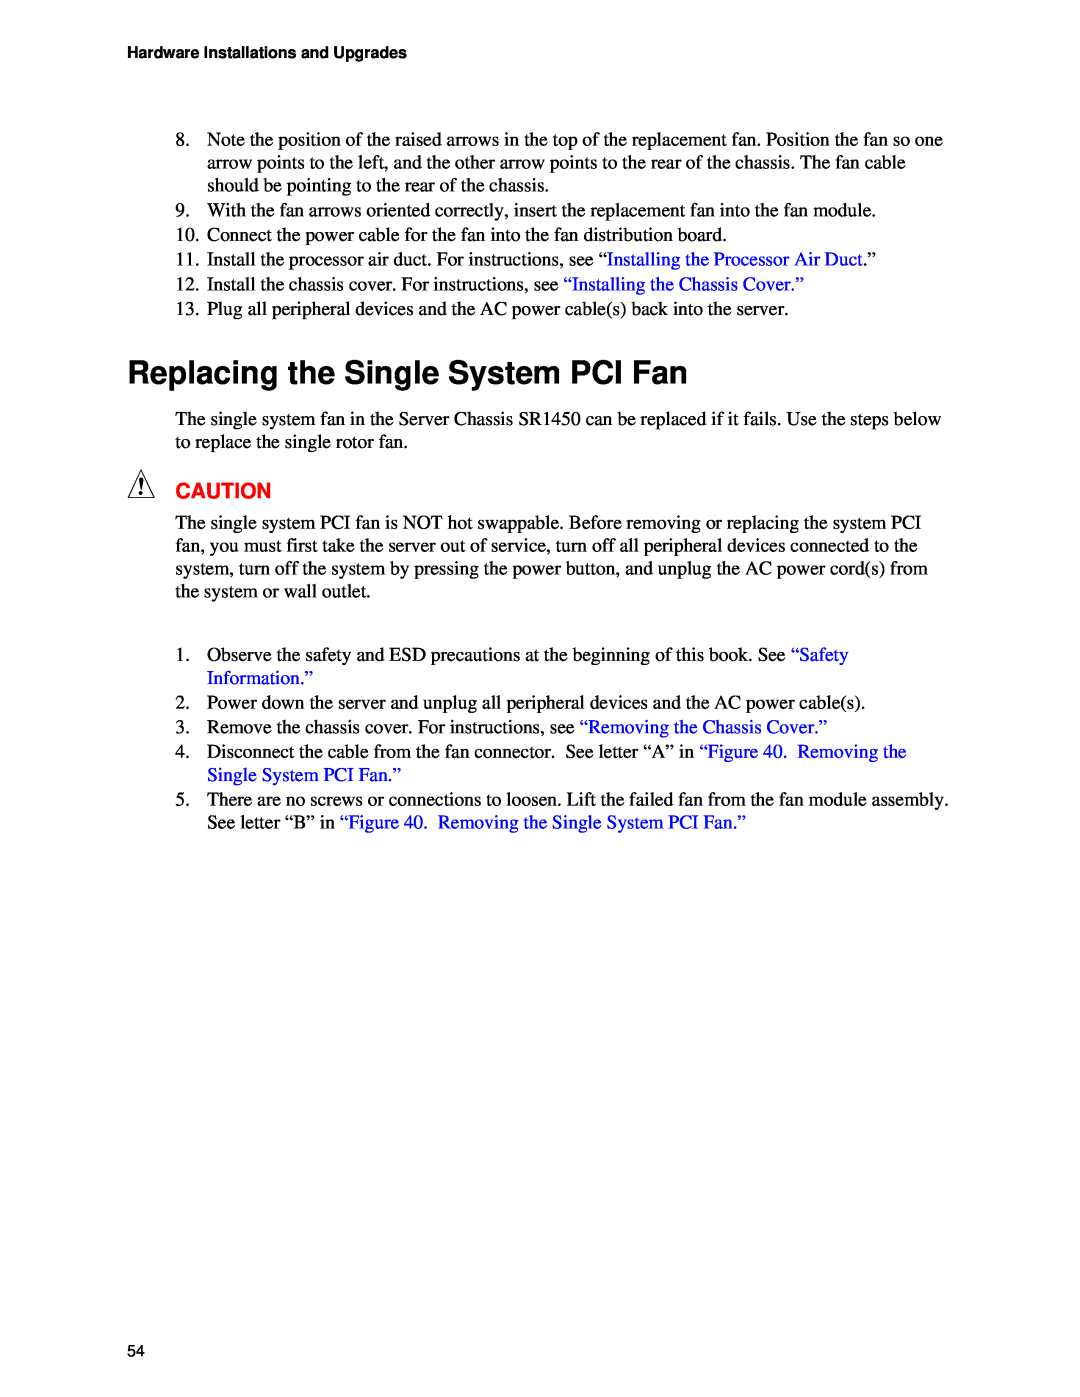 Intel SR1450 manual Replacing the Single System PCI Fan 